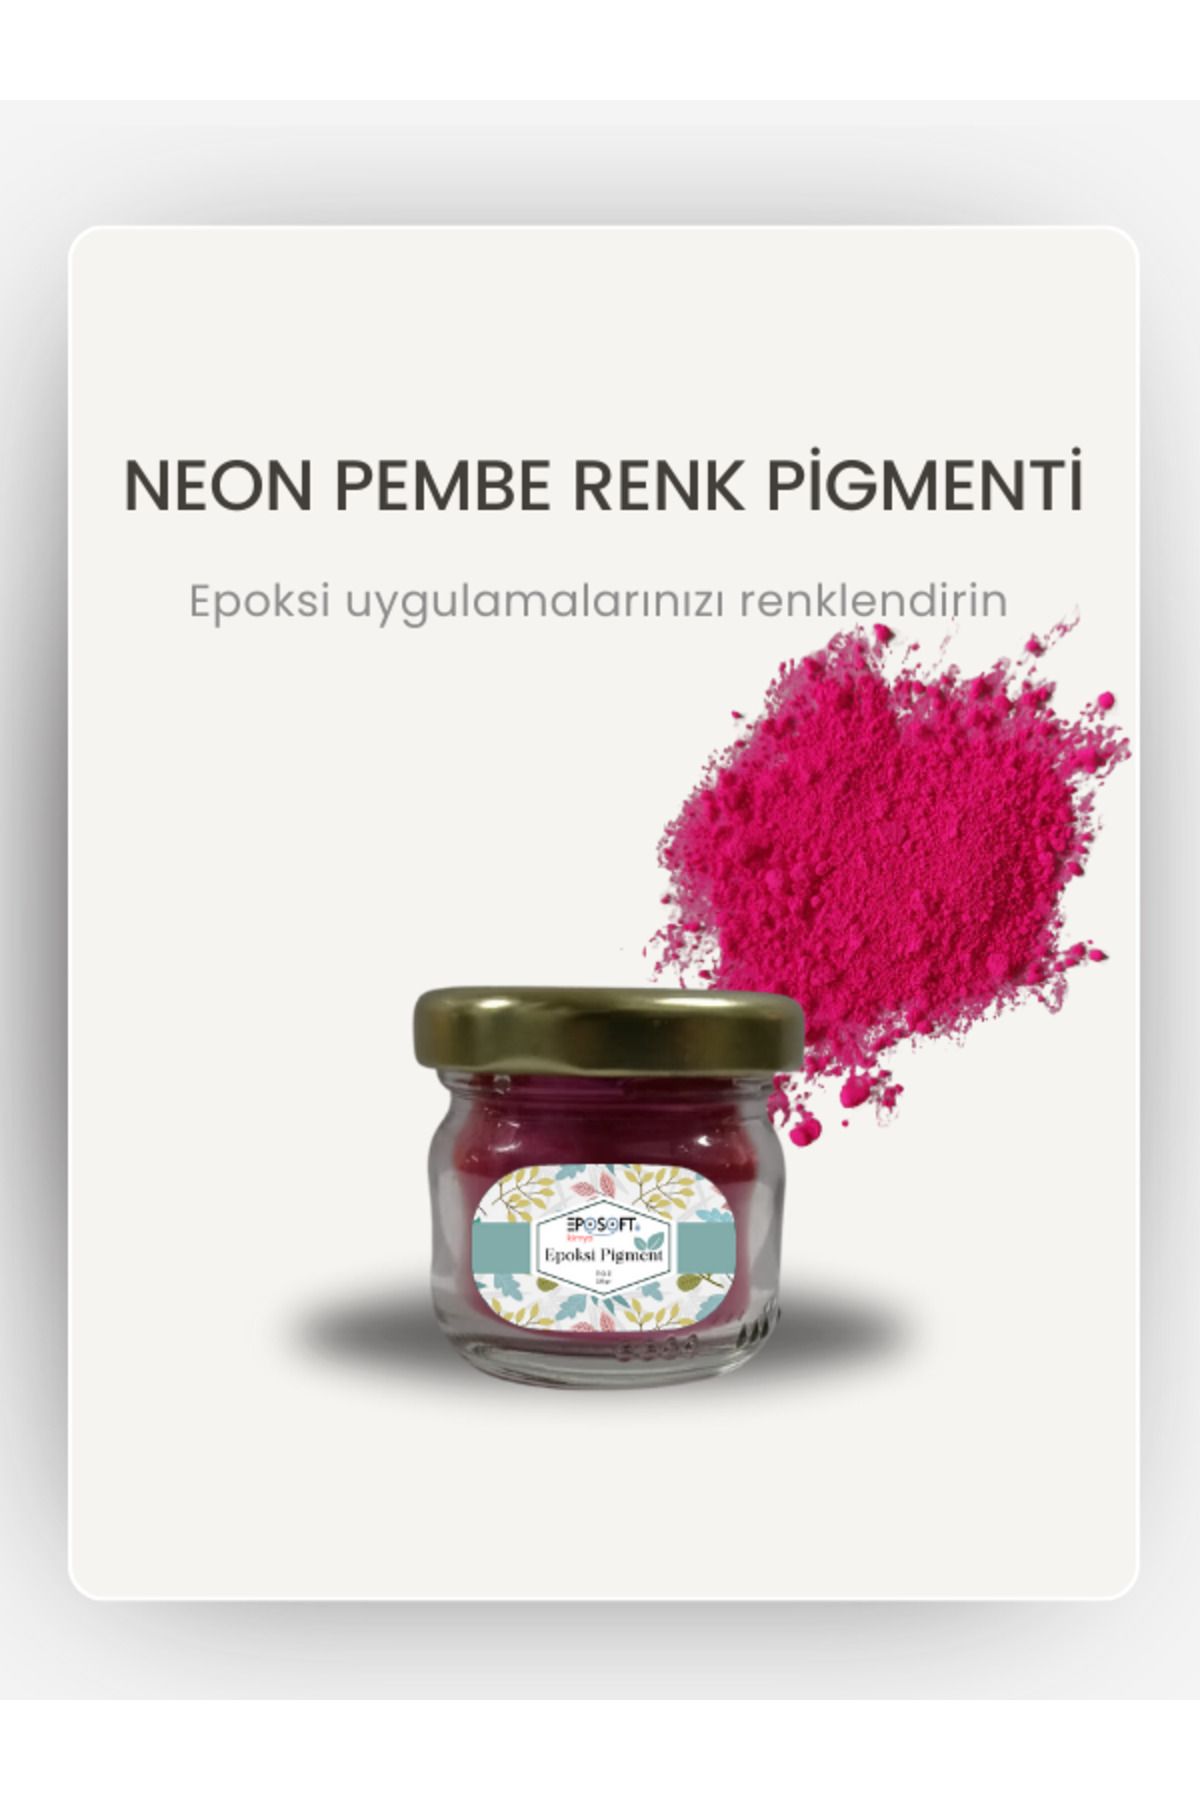 Eposoft Kimya Epoksi Renk Pigmenti Neon (Fosforlu) PembeToz Pigment Boya 10 gr